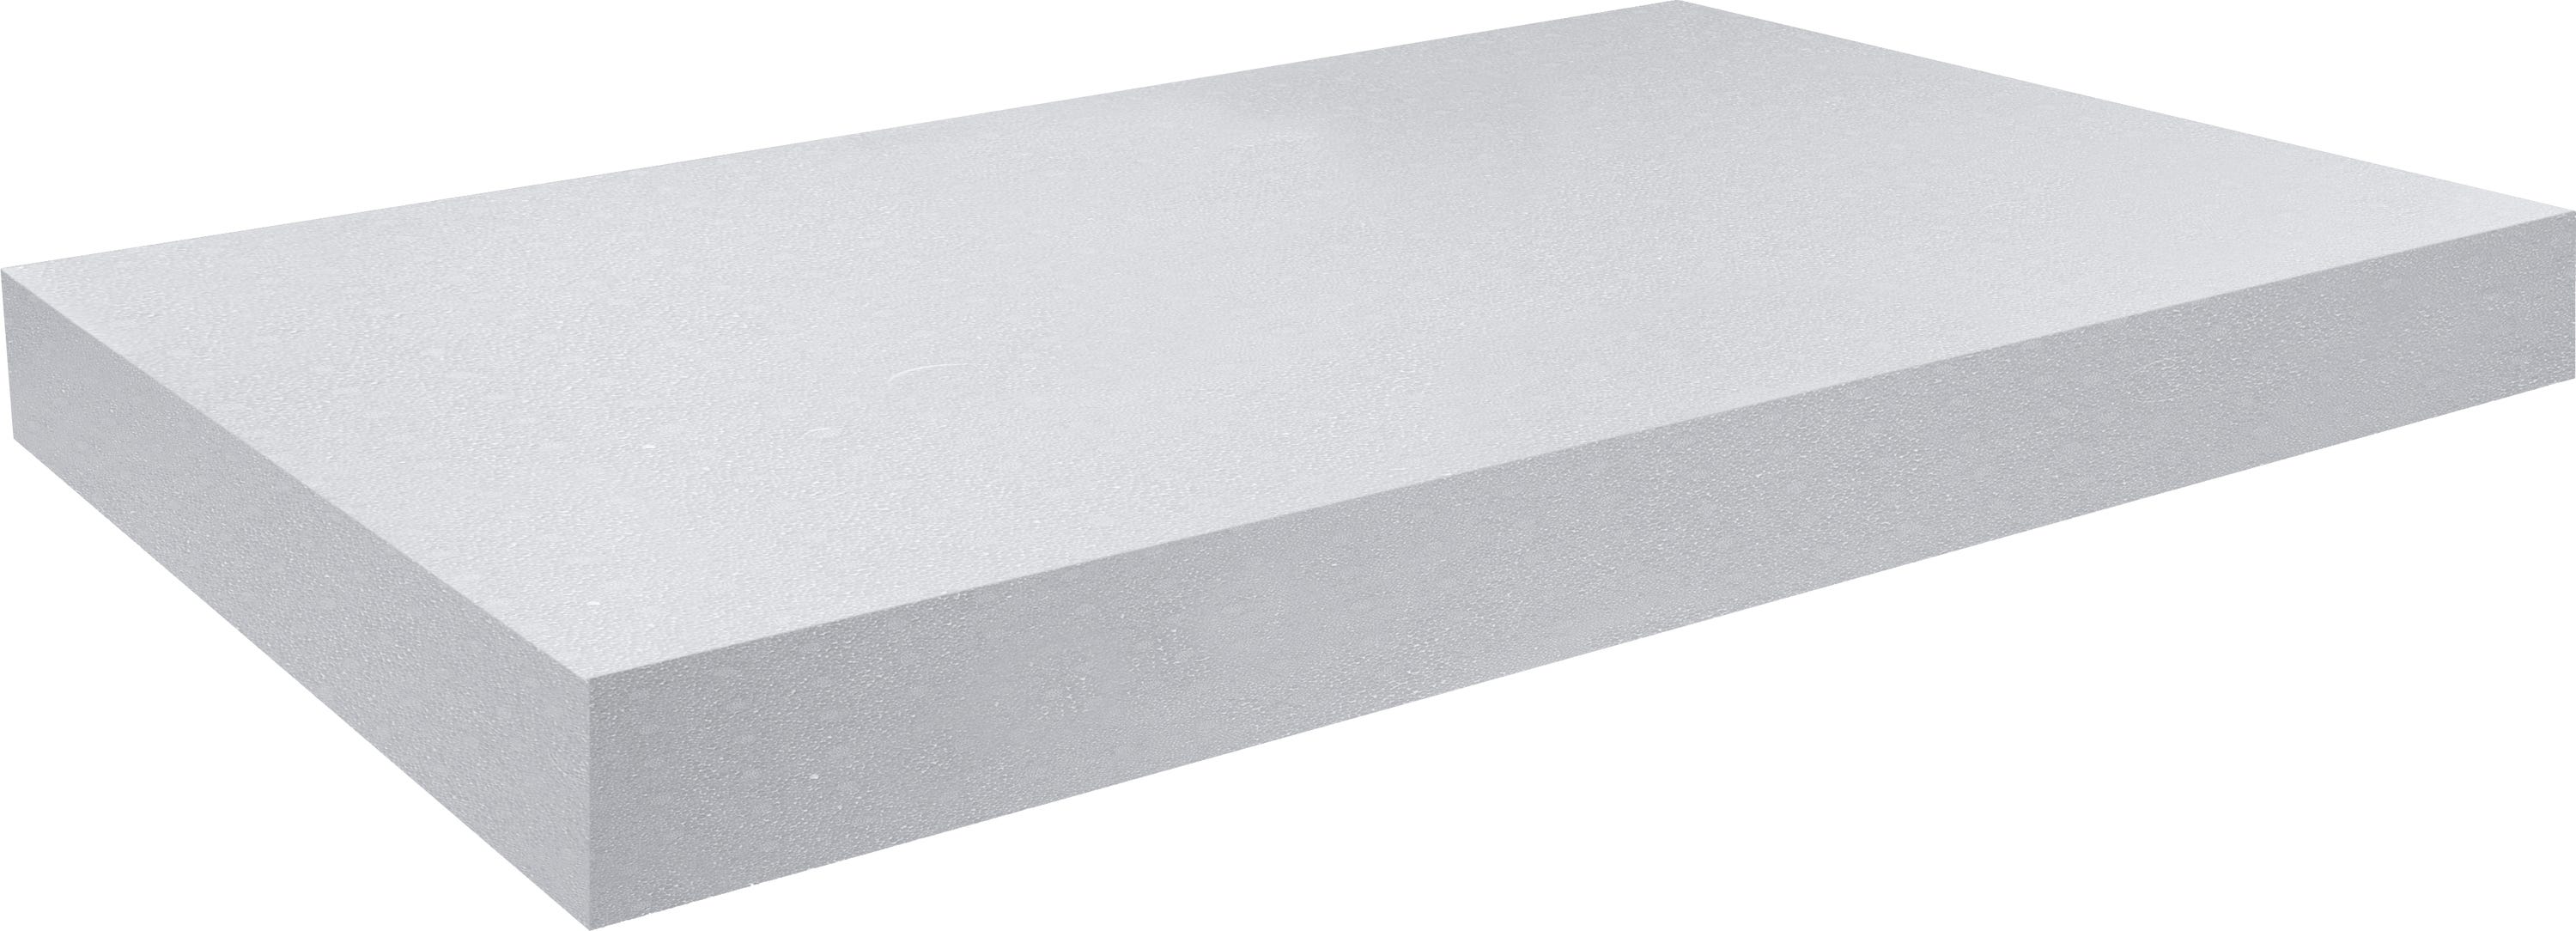 Panel de poliestireno expandido CYPSA Blanco 100x200x5cm